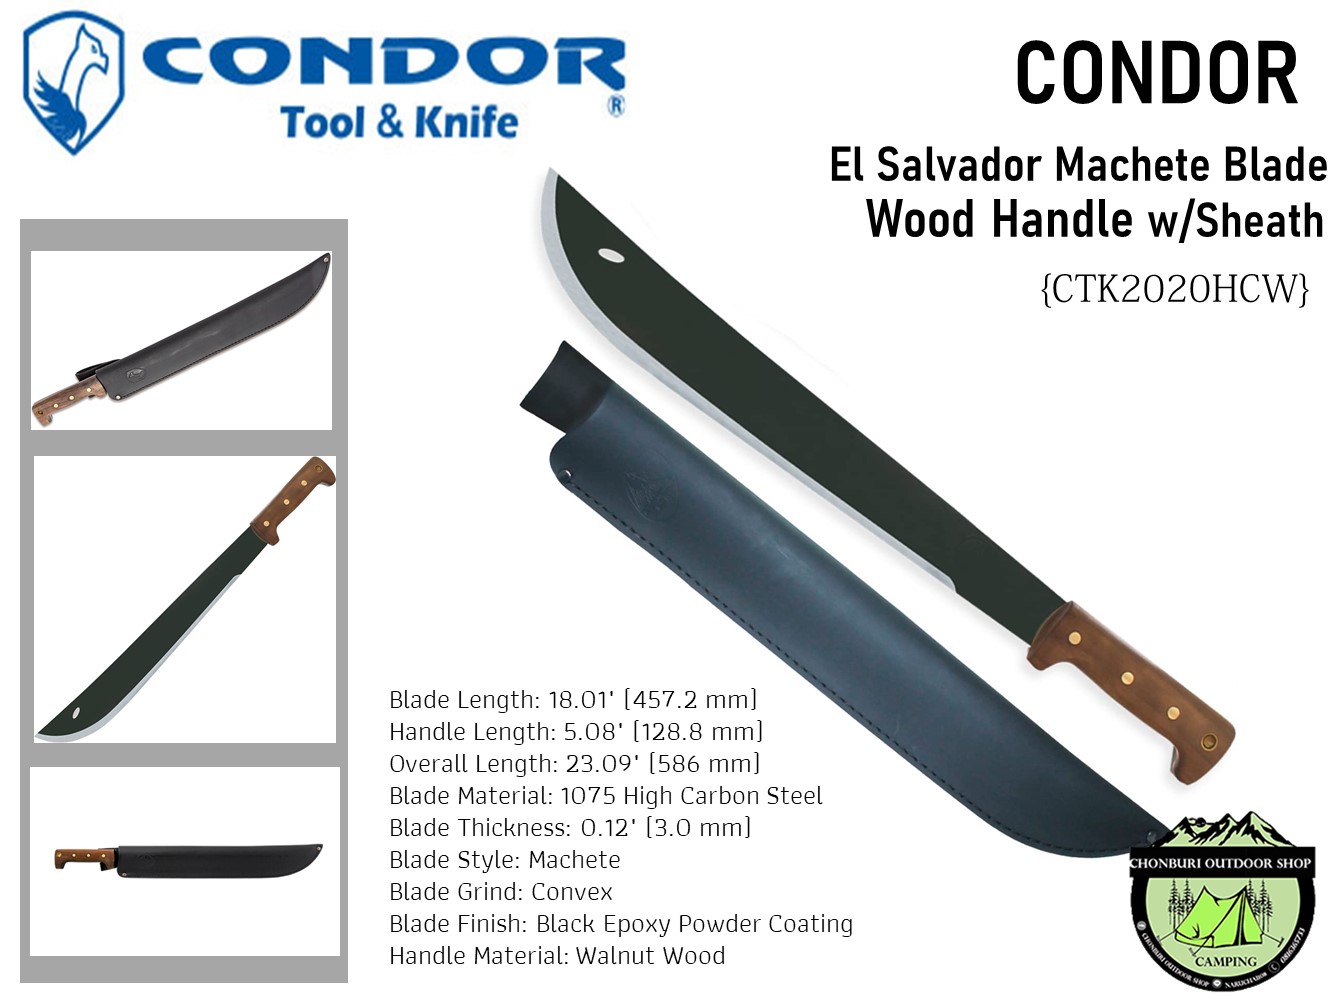 Condor Machete ราคาถูก ซื้อออนไลน์ที่ - ส.ค. 2022 | Lazada.co.th